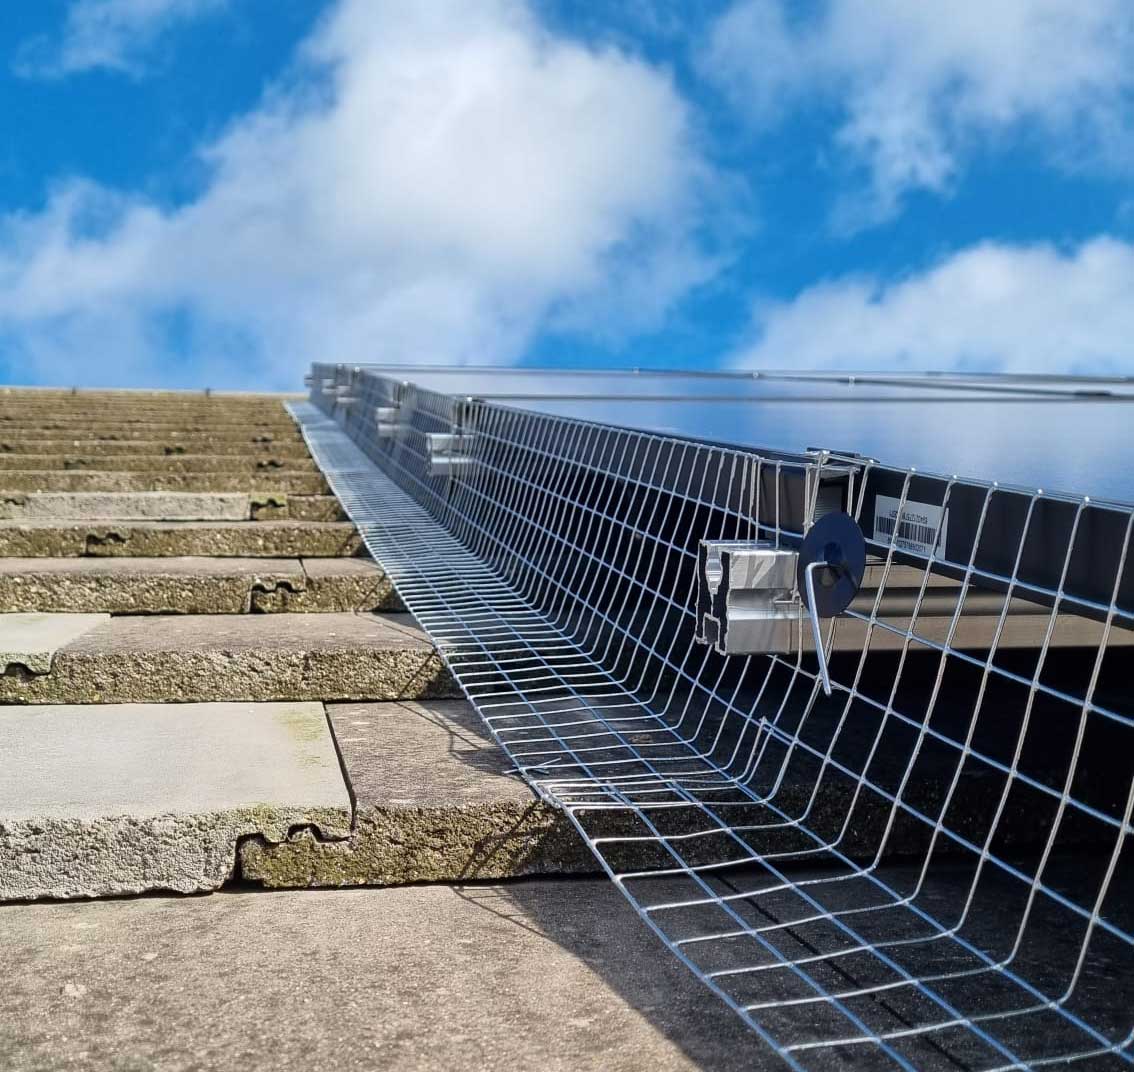 New Solar Panels Attract Pigeons